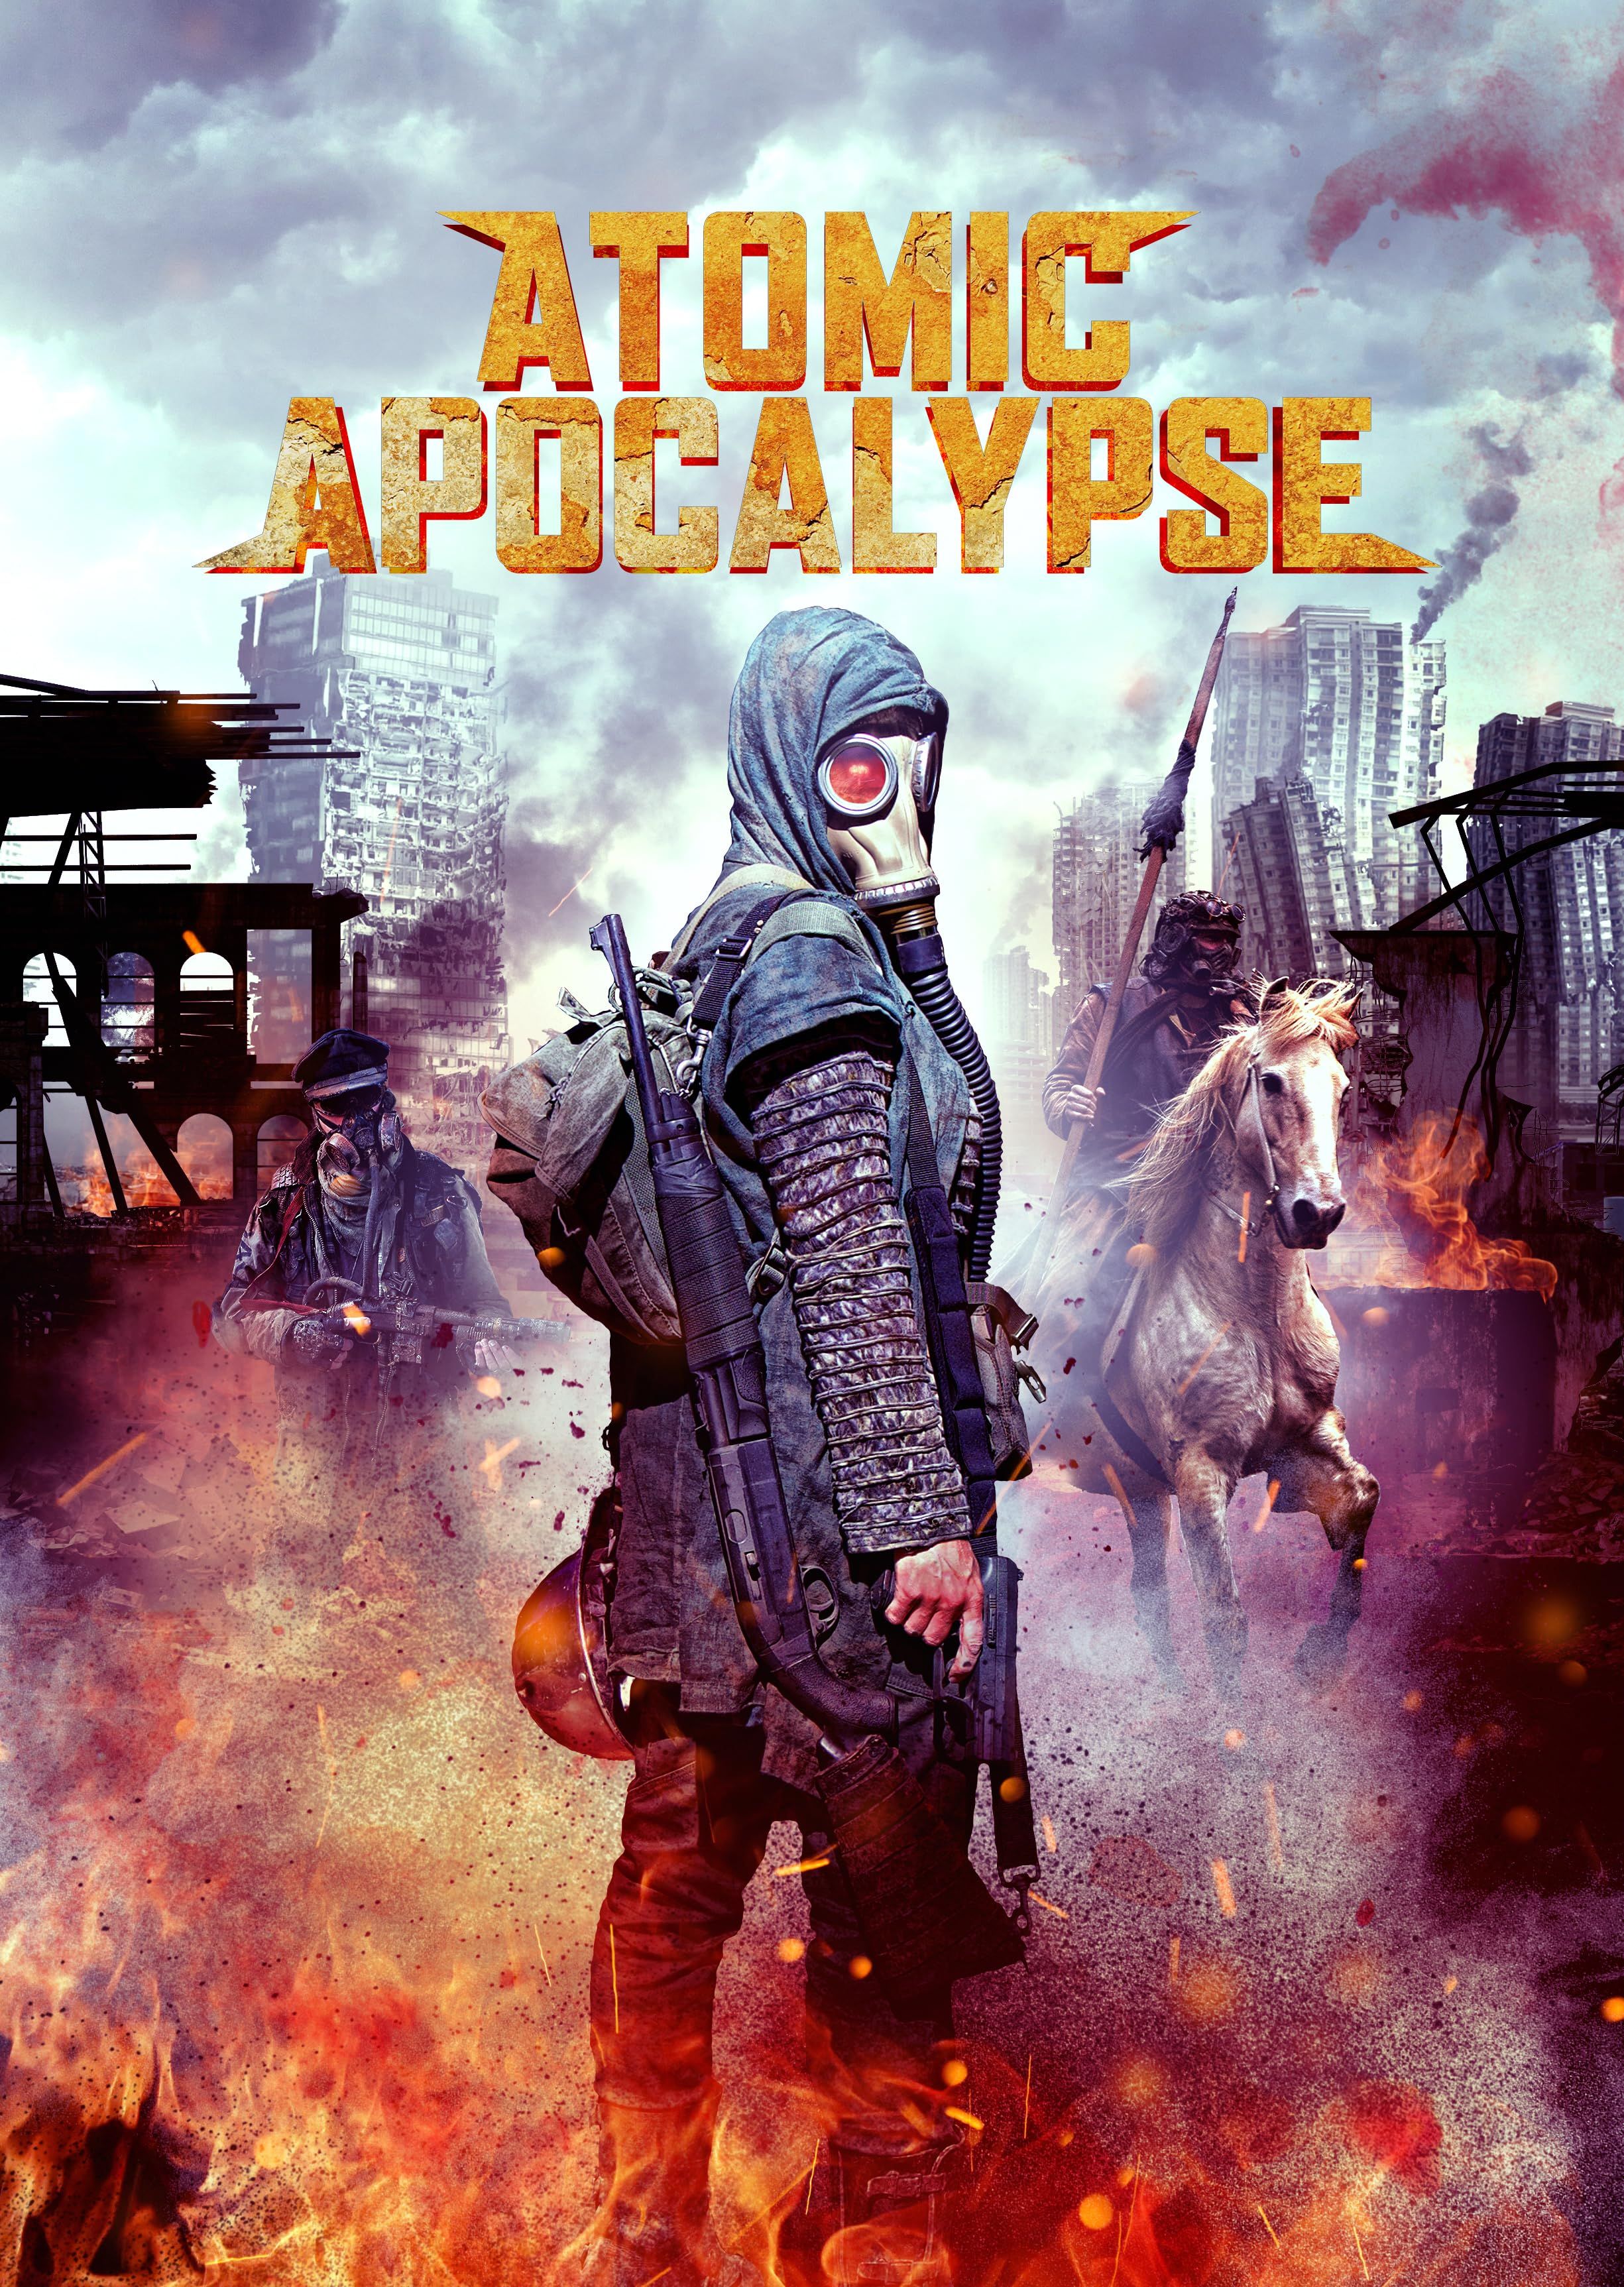 Atomic Apocalypse (2018) Hindi Dubbed Movie download full movie